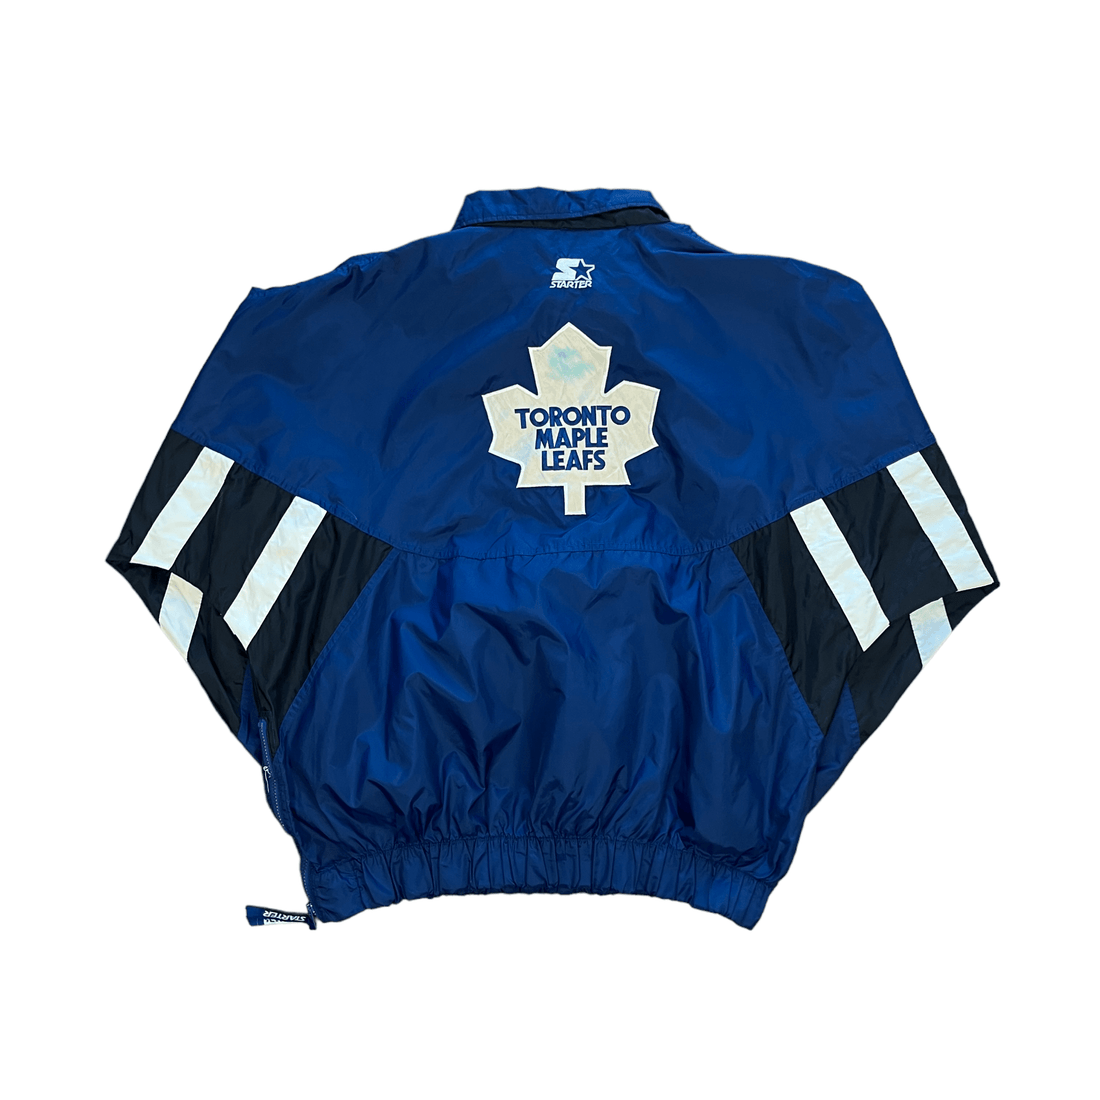 Vintage 90s Navy Blue, Black + White Starter Toronto Maples Leafs NHL Quarter Zip Jacket - Extra Large - The Streetwear Studio